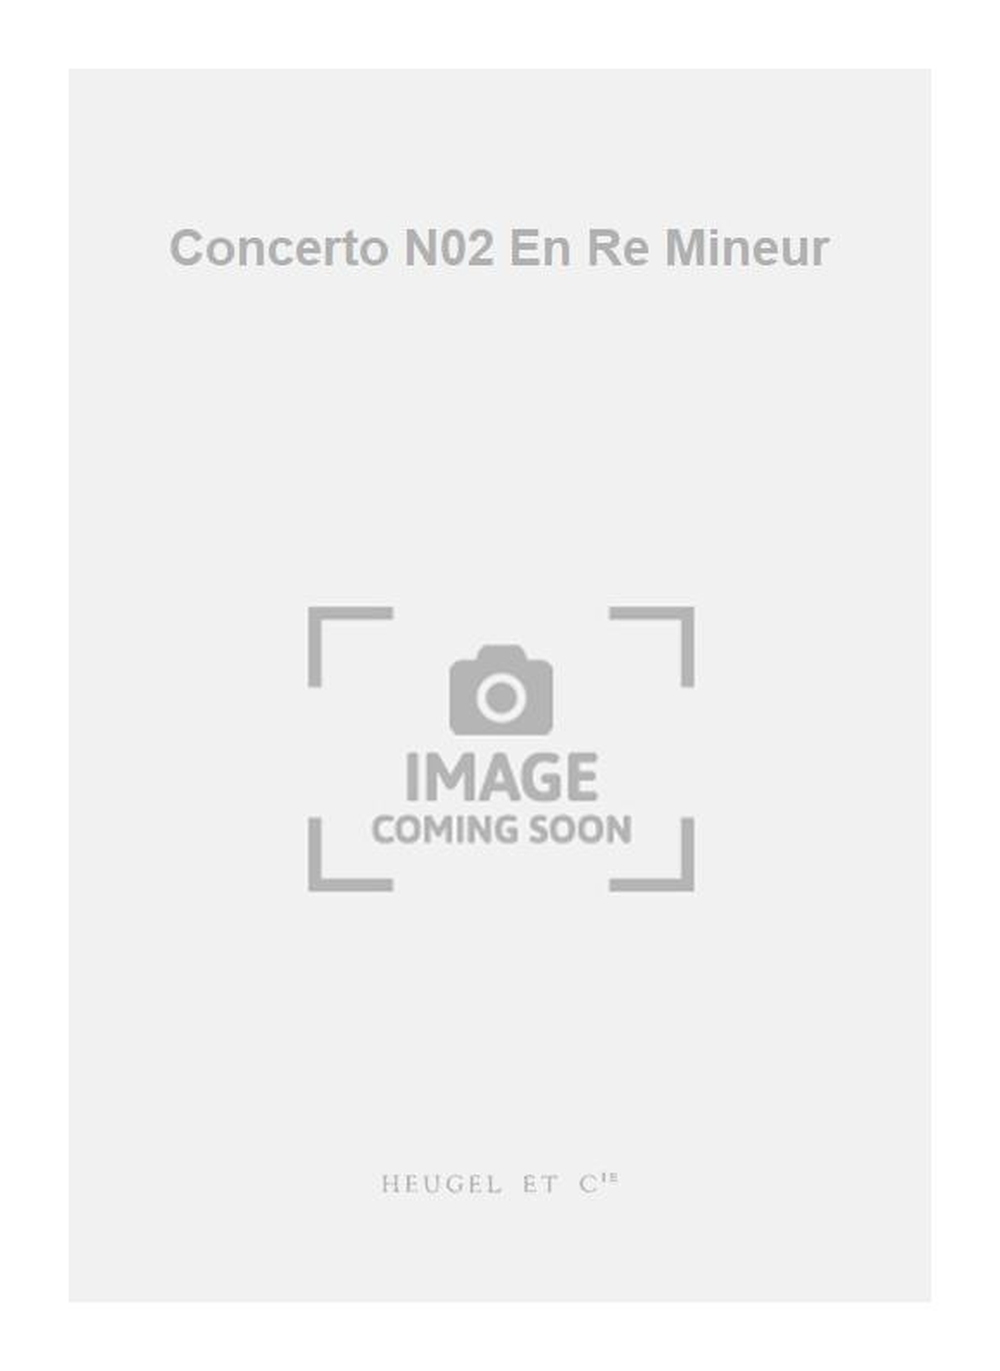 Claude Arrieu: Concerto N02 En Re Mineur